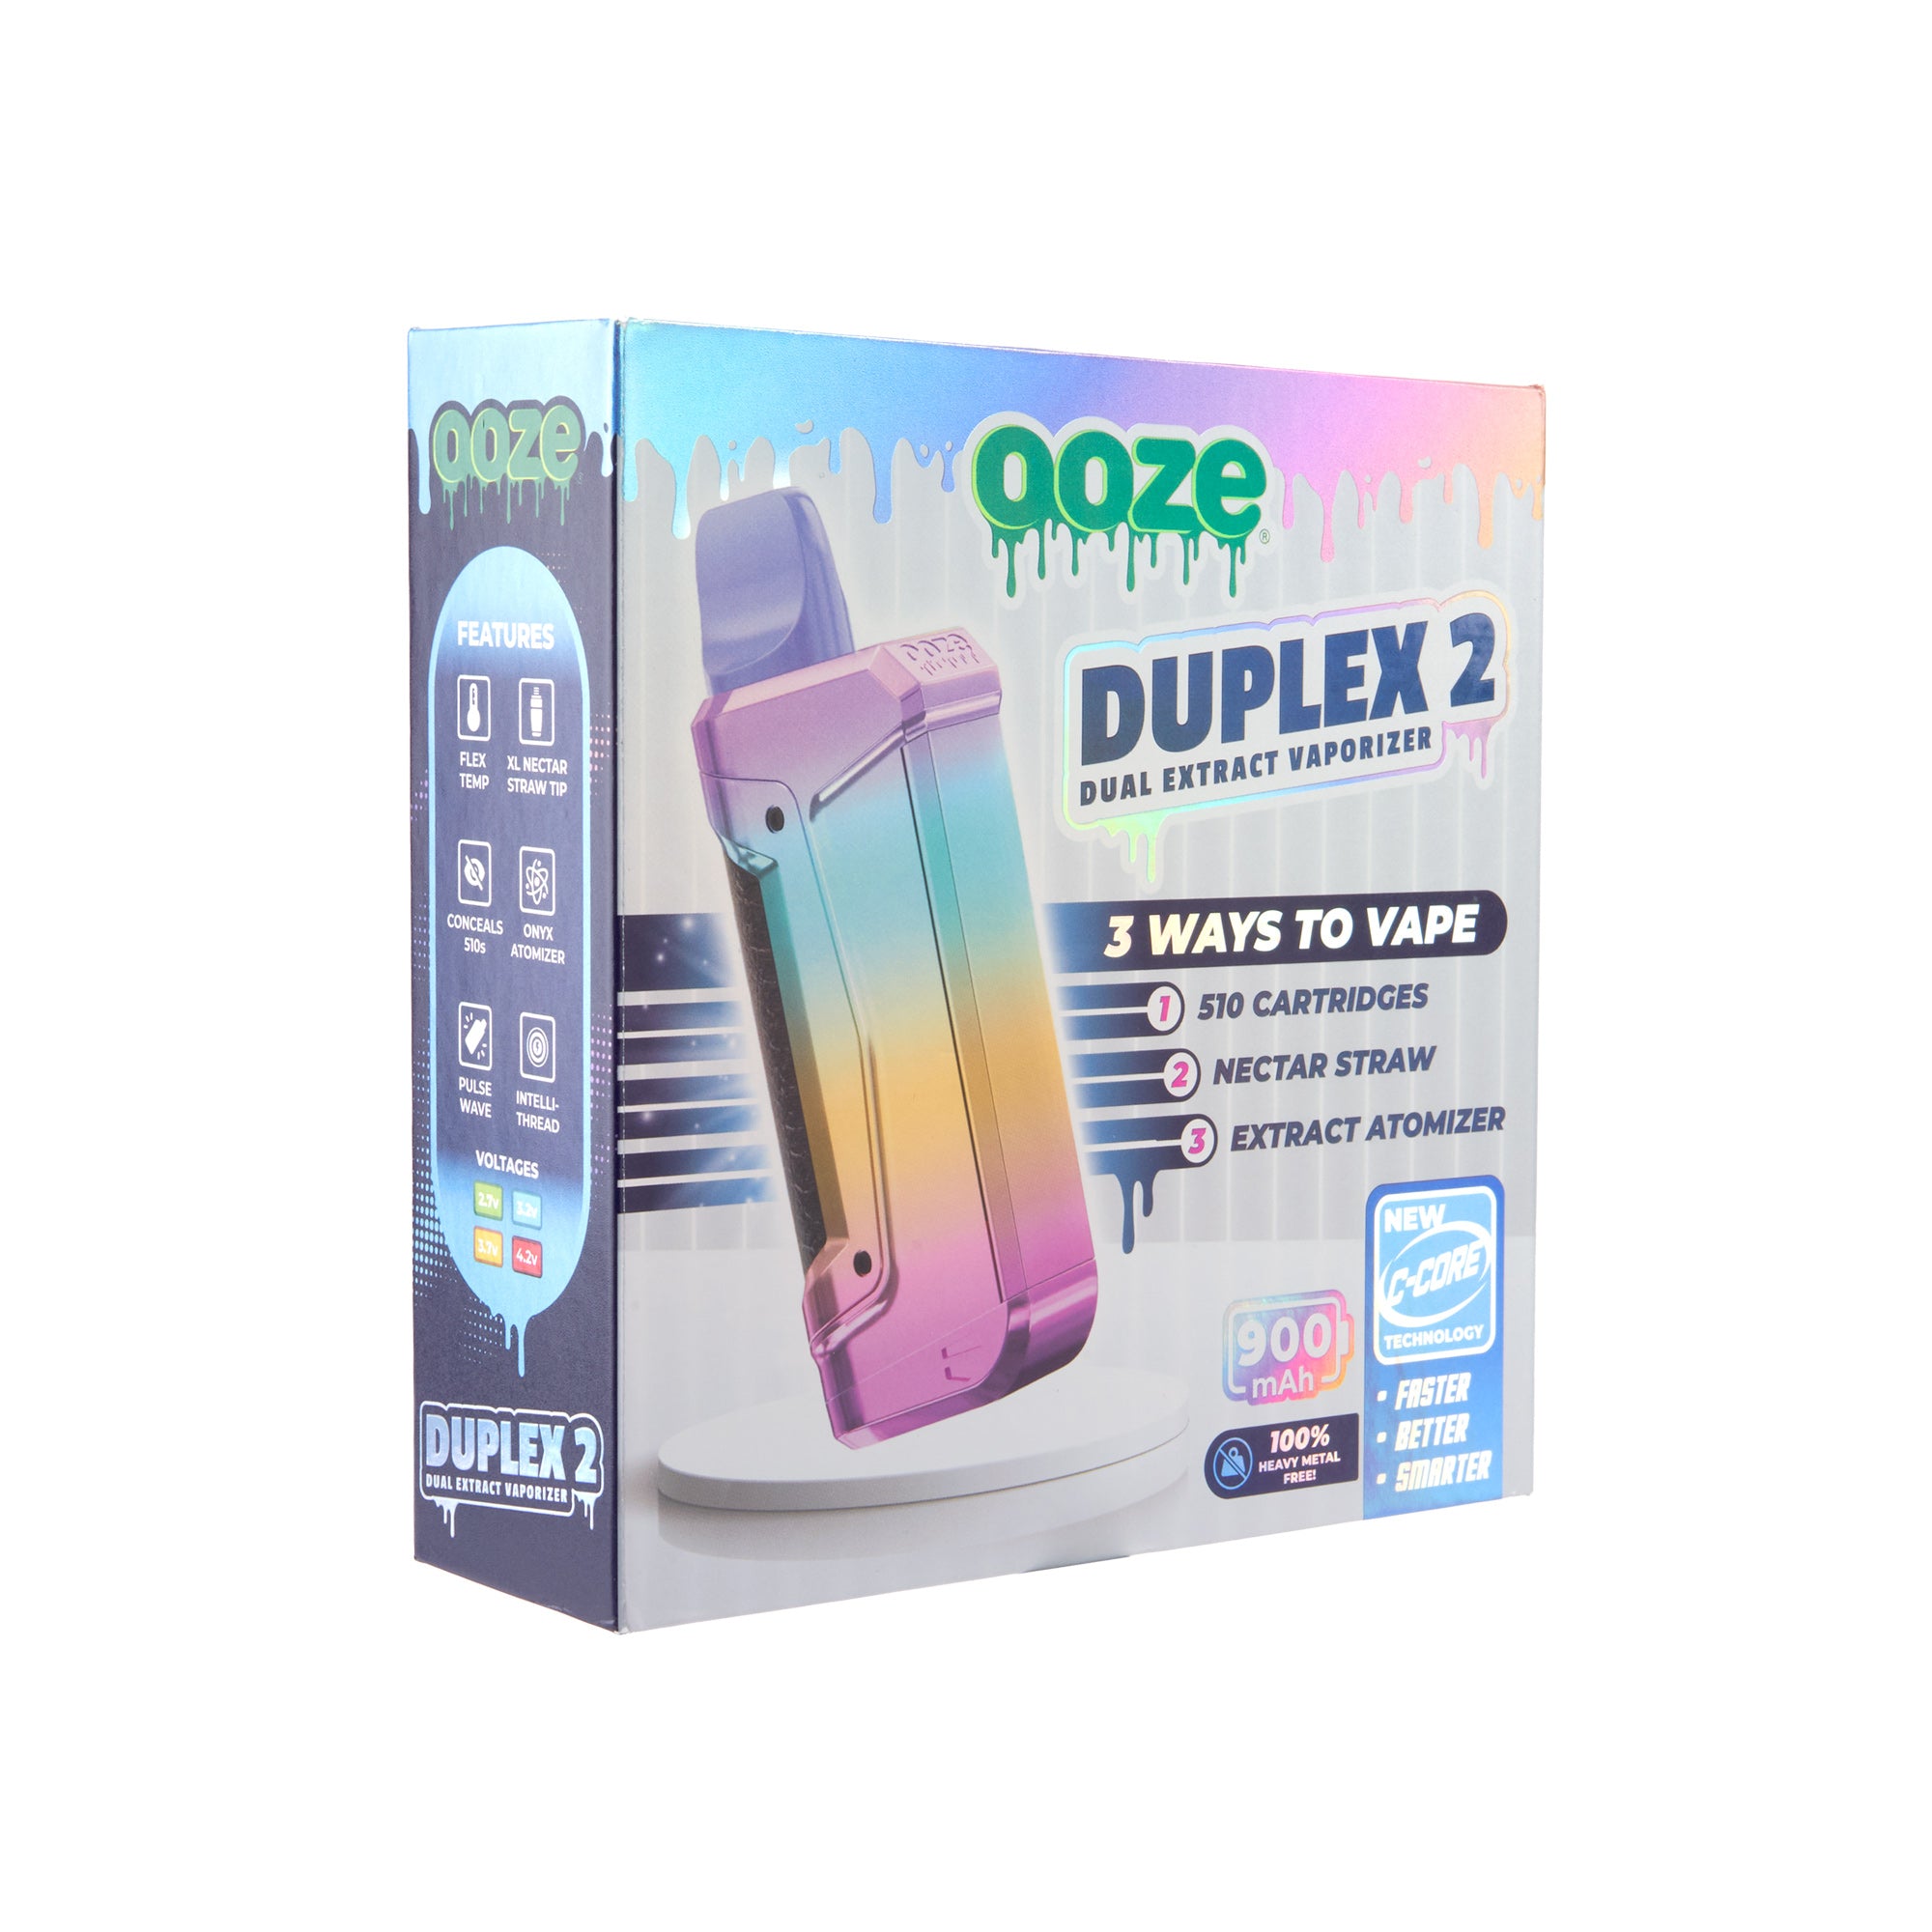 Ooze Duplex 2 – 900 mAh C-Core Vaporizer